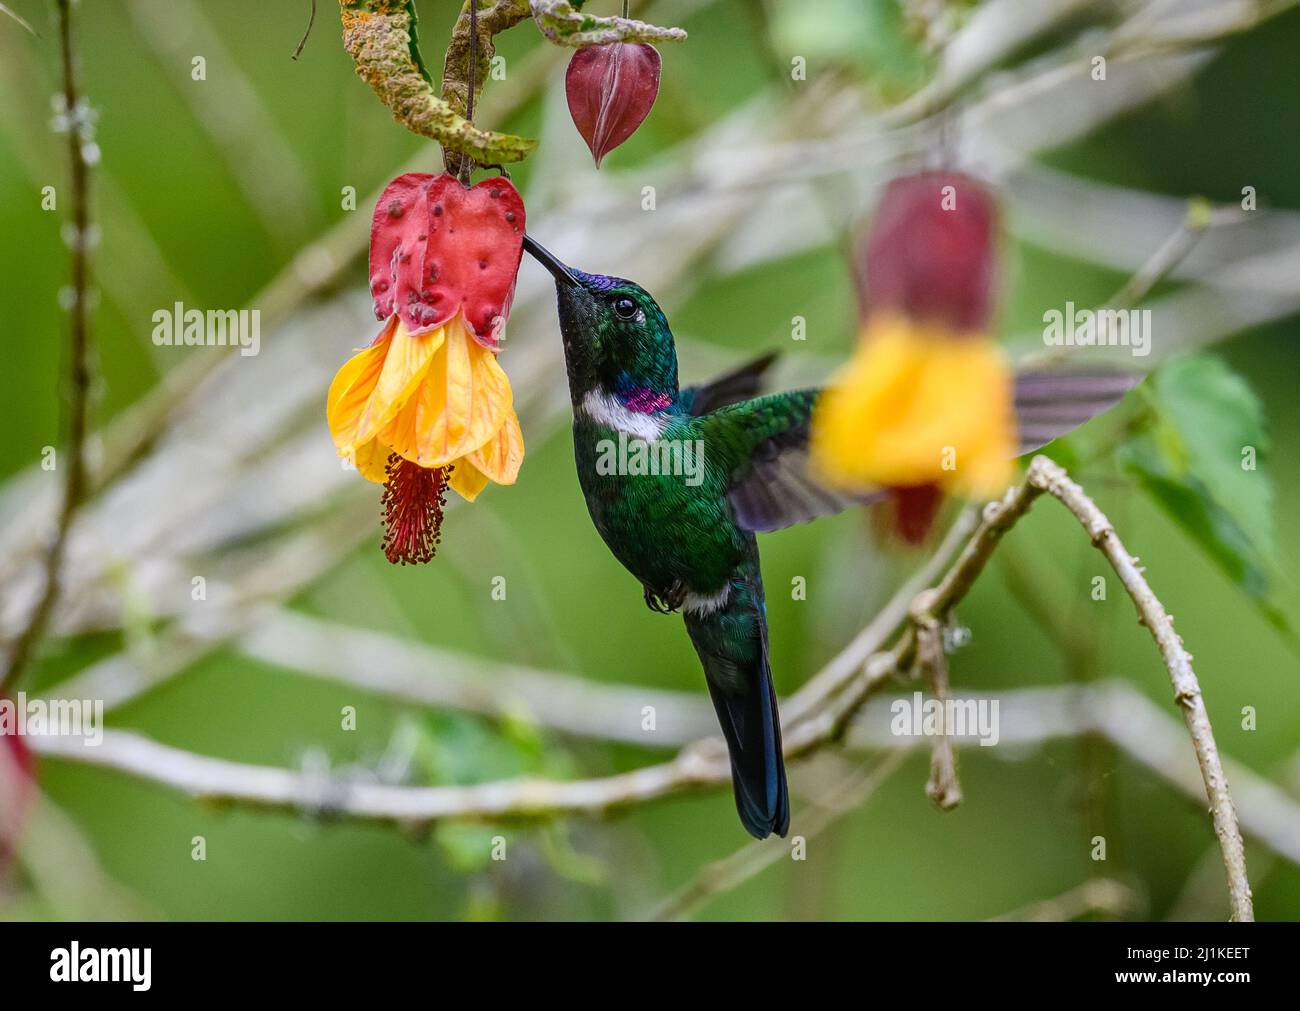 A male White-throated Daggerbill hummingbird (Schistes albogularis) feeding on flowers. Colombia, South America. Stock Photo